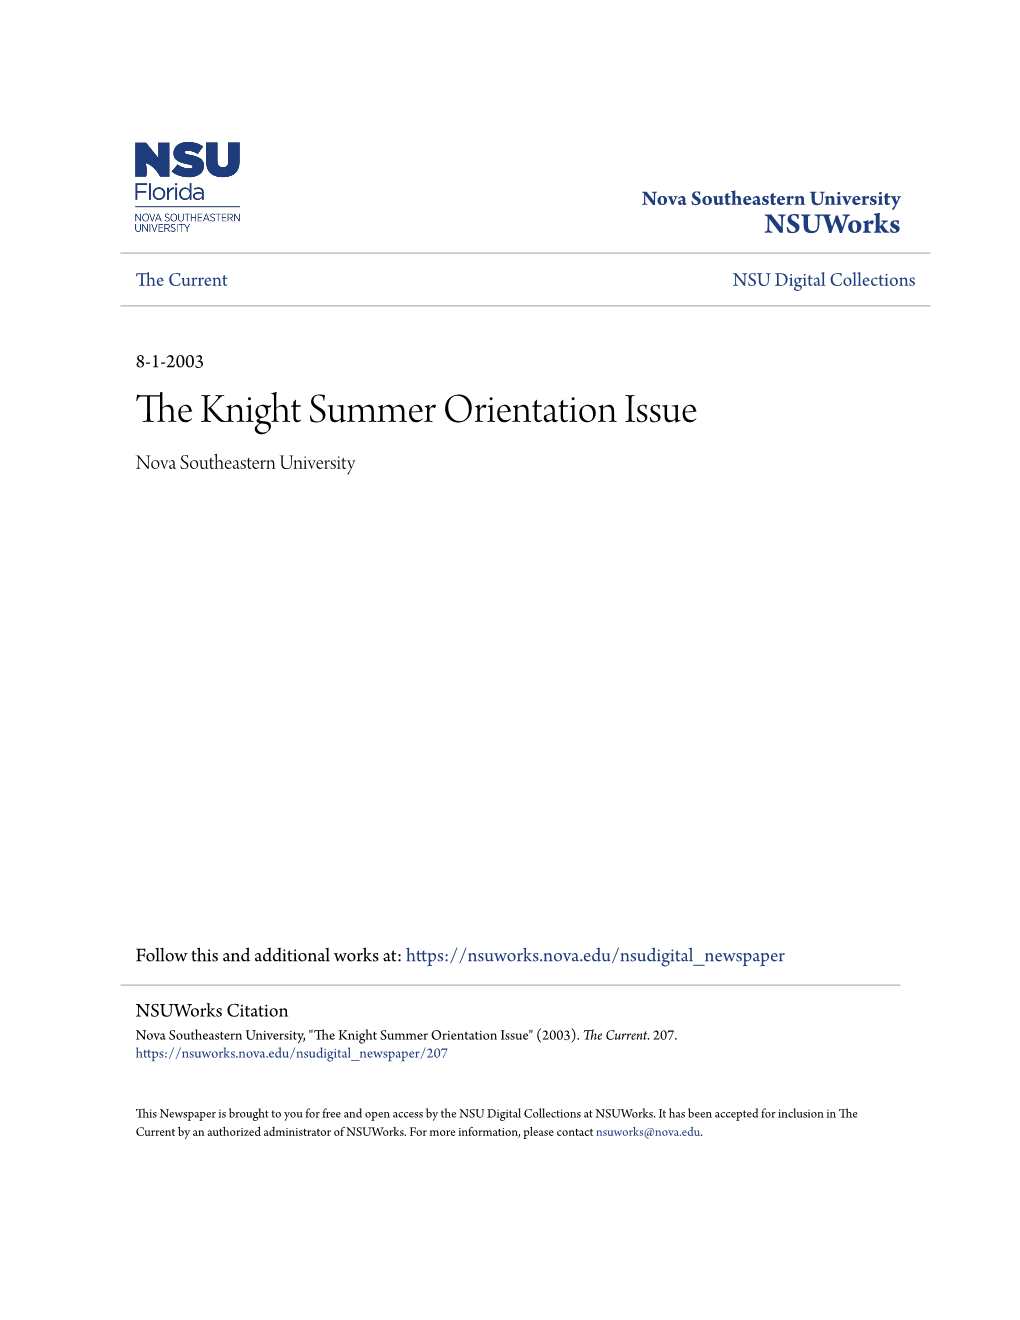 The Knight Summer Orientation Issue Nova Southeastern University